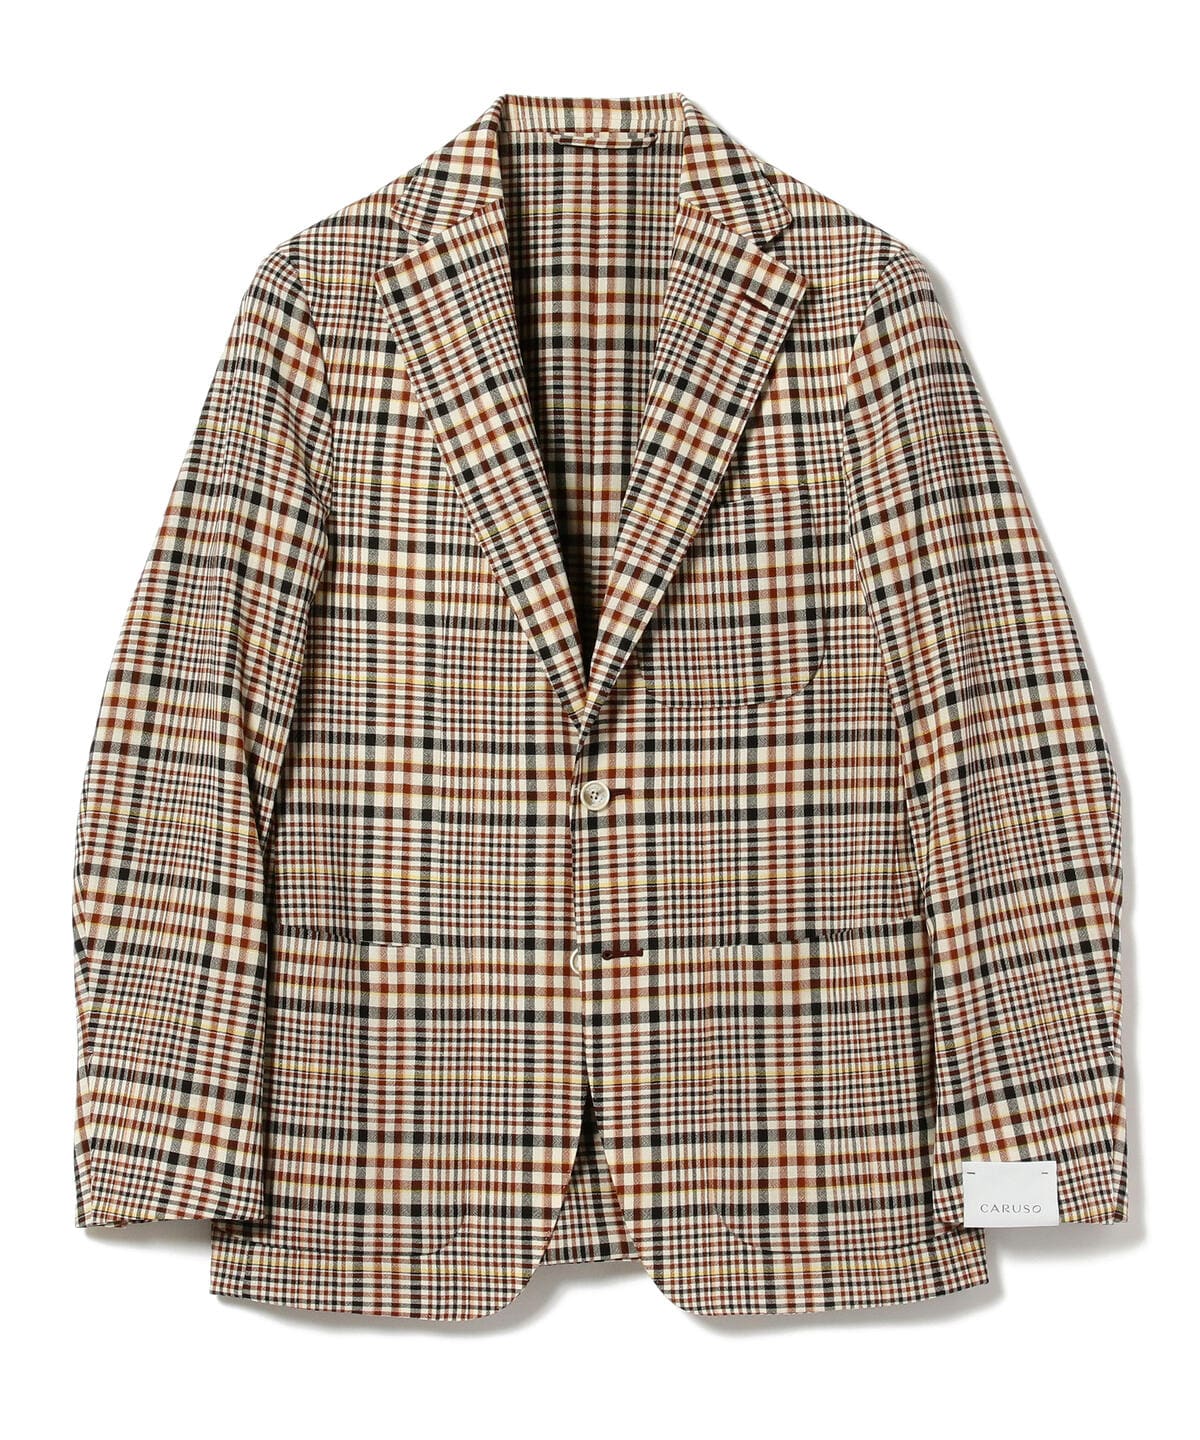 BEAMS F BEAMS Outlet] CARUSO / PONZA check jacket (tailored jacket 